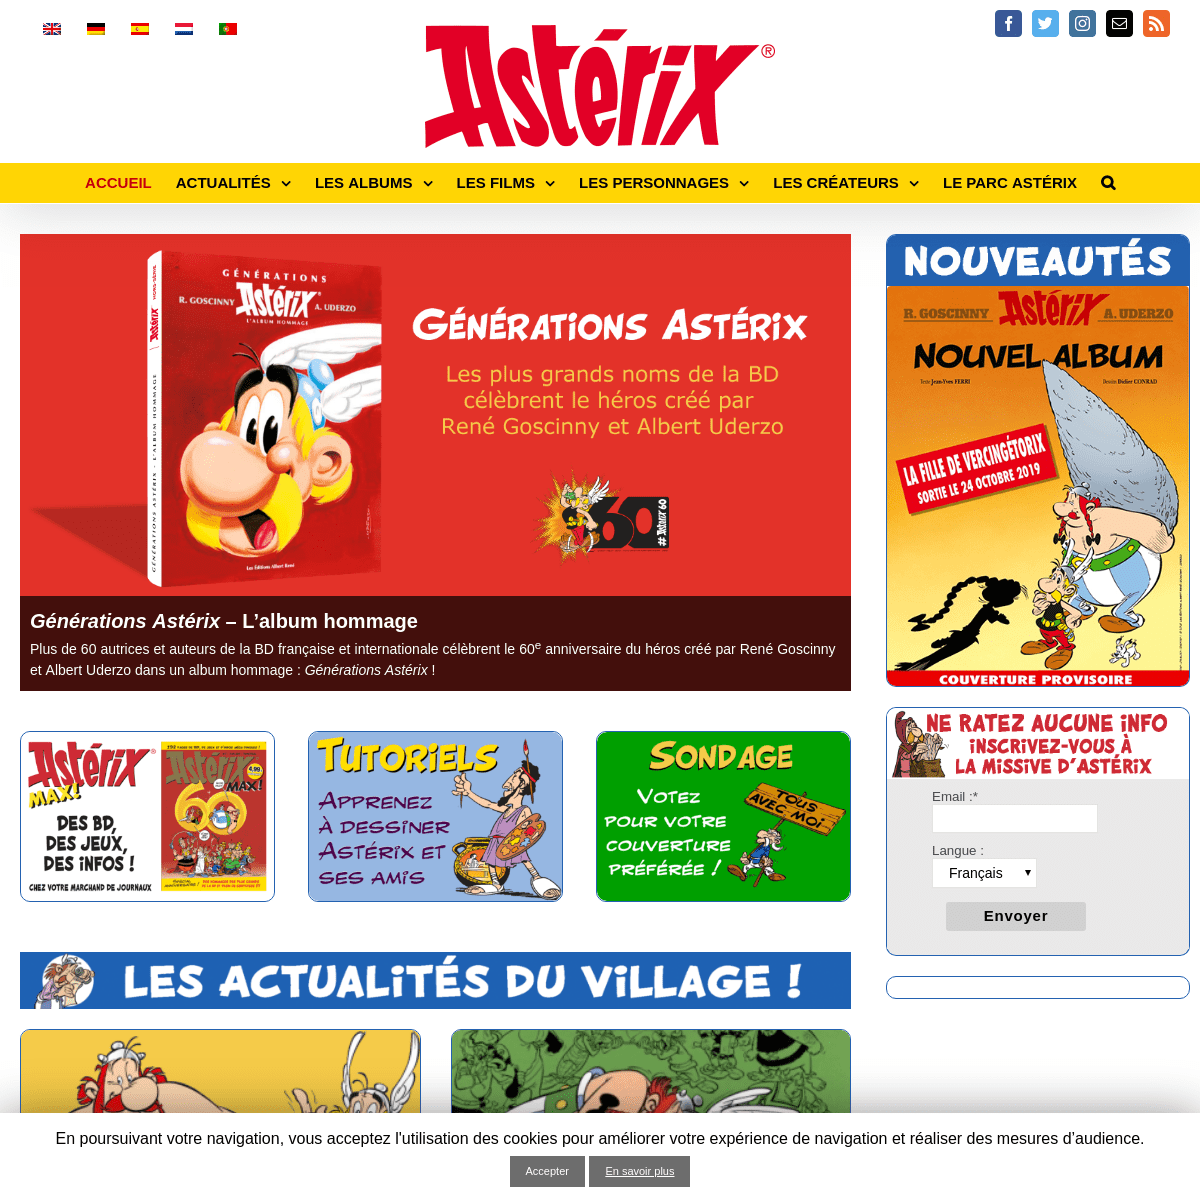 A complete backup of asterix.com